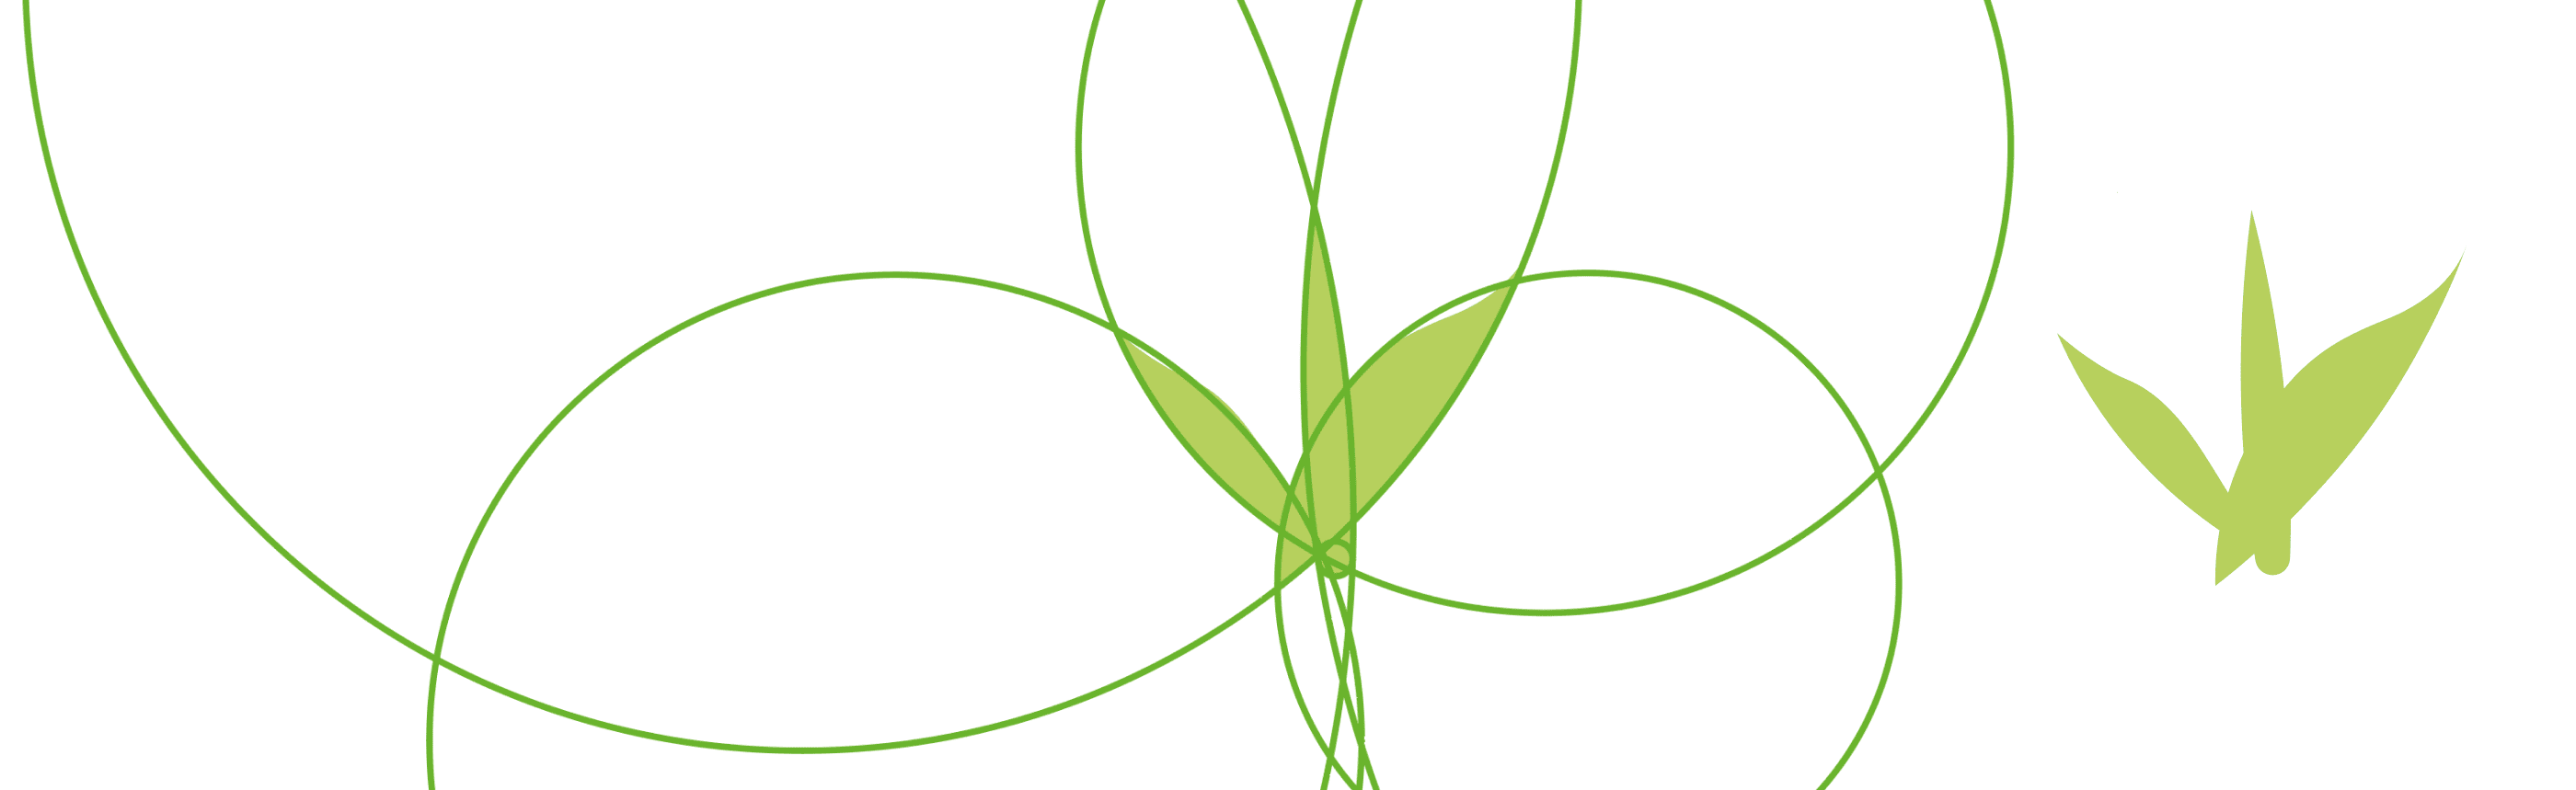 Bamboo Partnership Logo Geometry